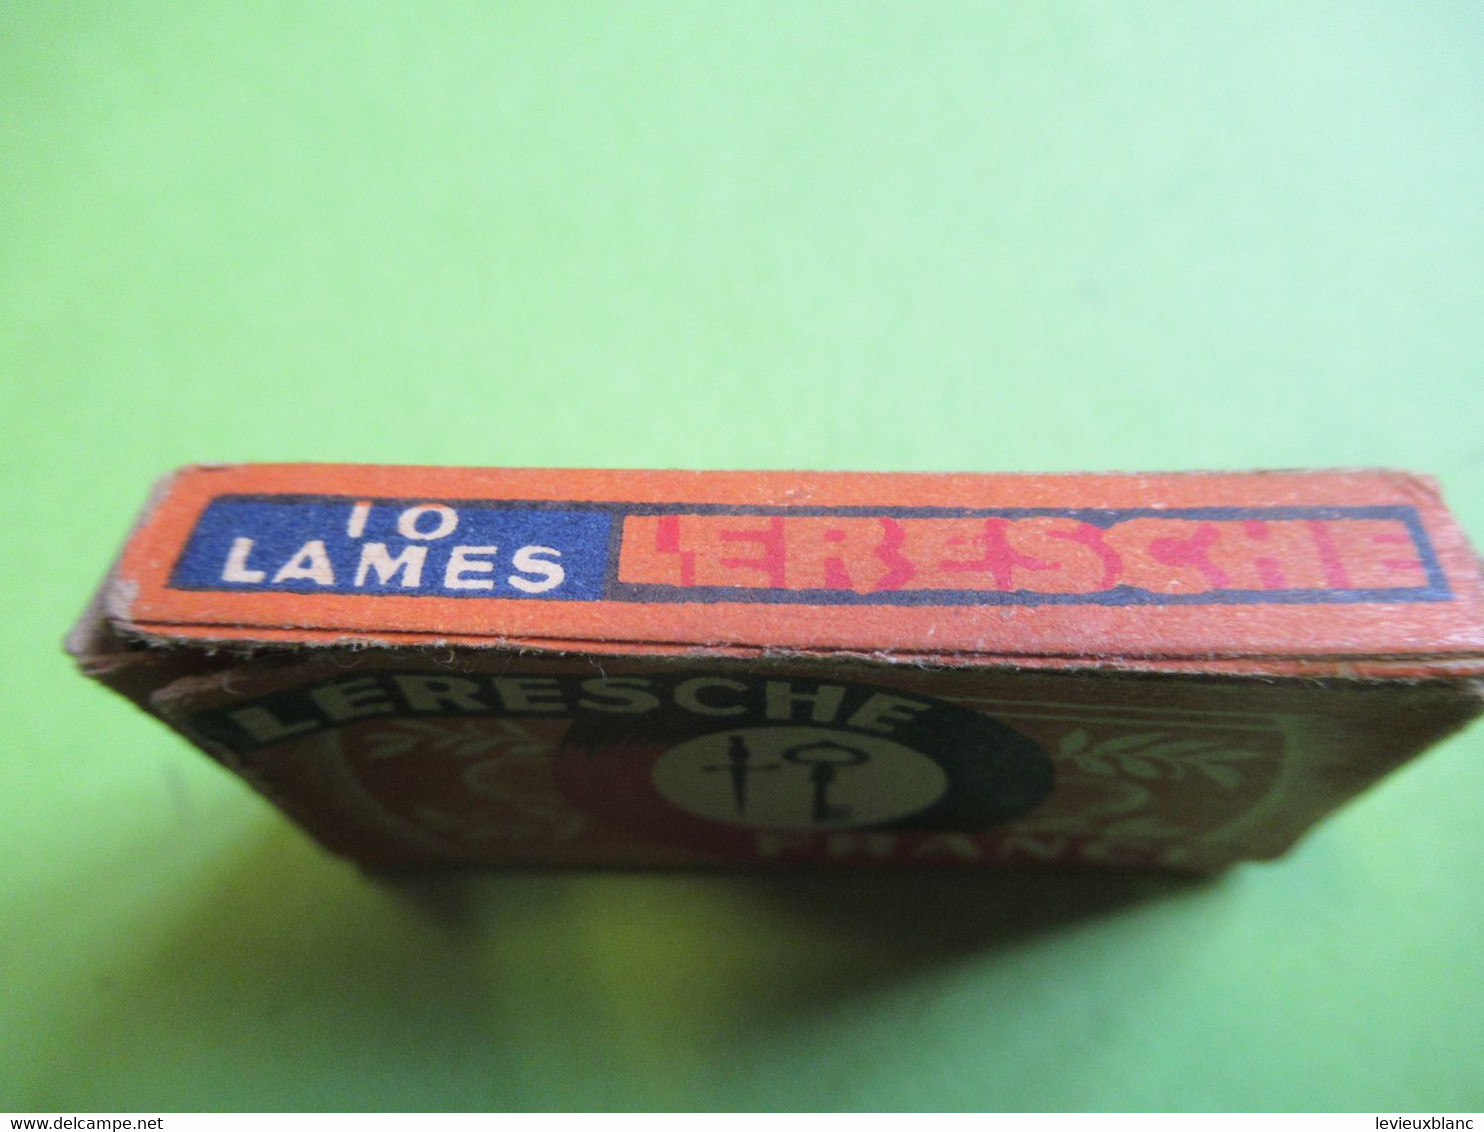 Etui Carton Pour 10 Lames De Rasoir/avec 2 Lames /LERESCHE France/ Made In France//Vers 1930-1950   PARF219 - Lames De Rasoir